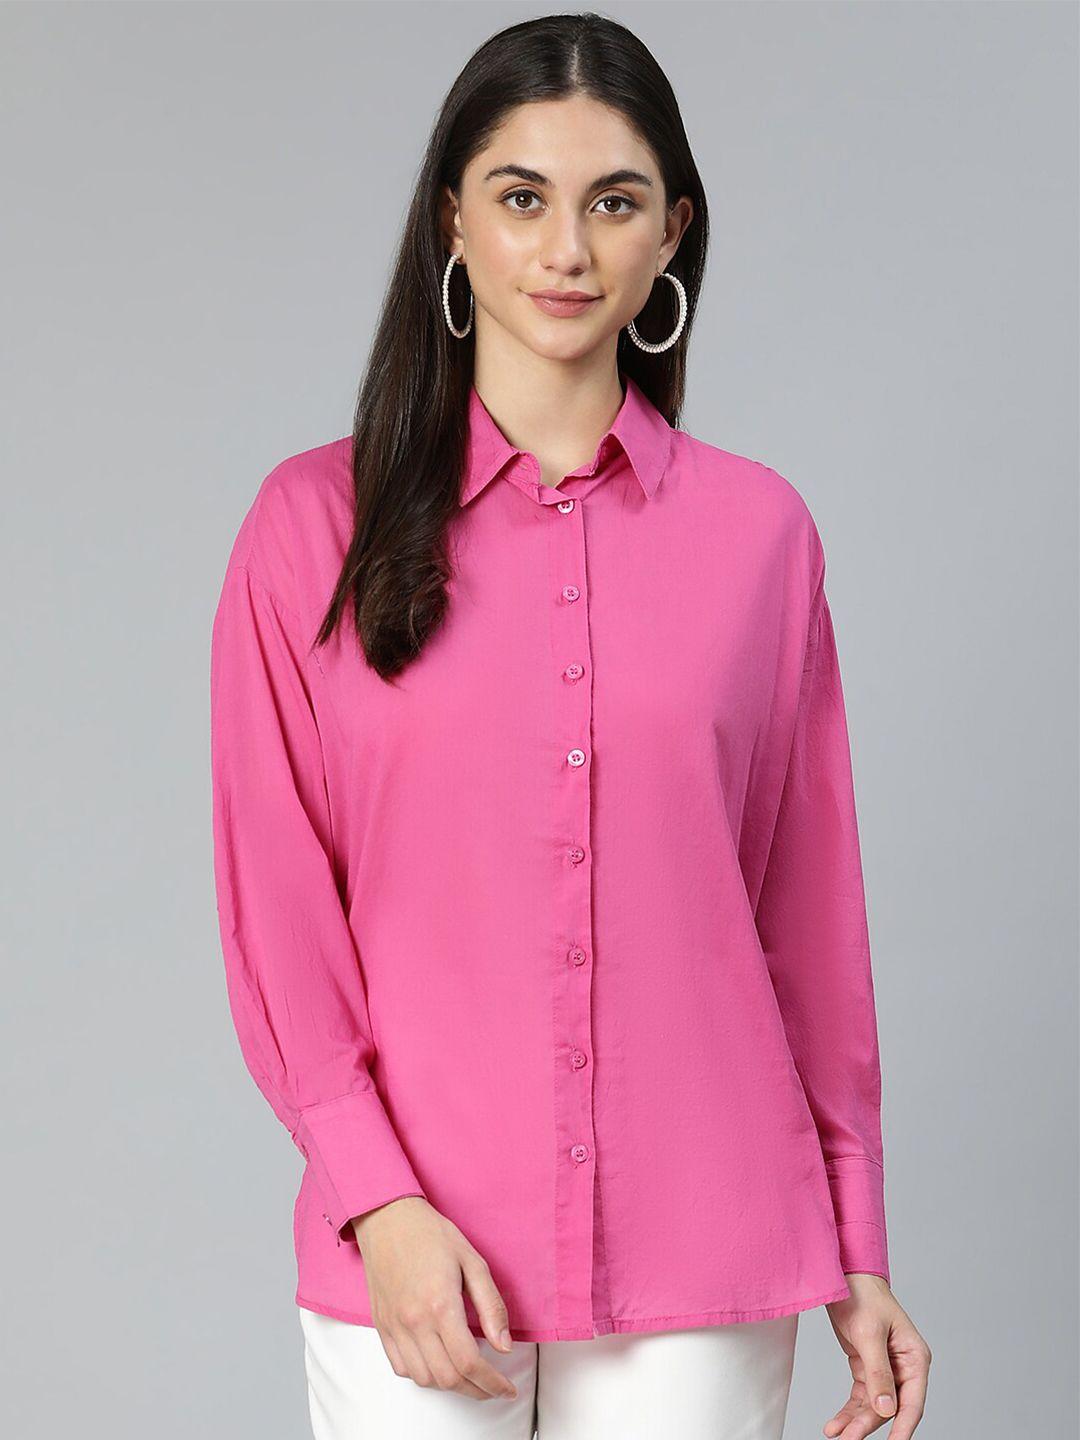 oxolloxo women pink cotton standard casual shirt